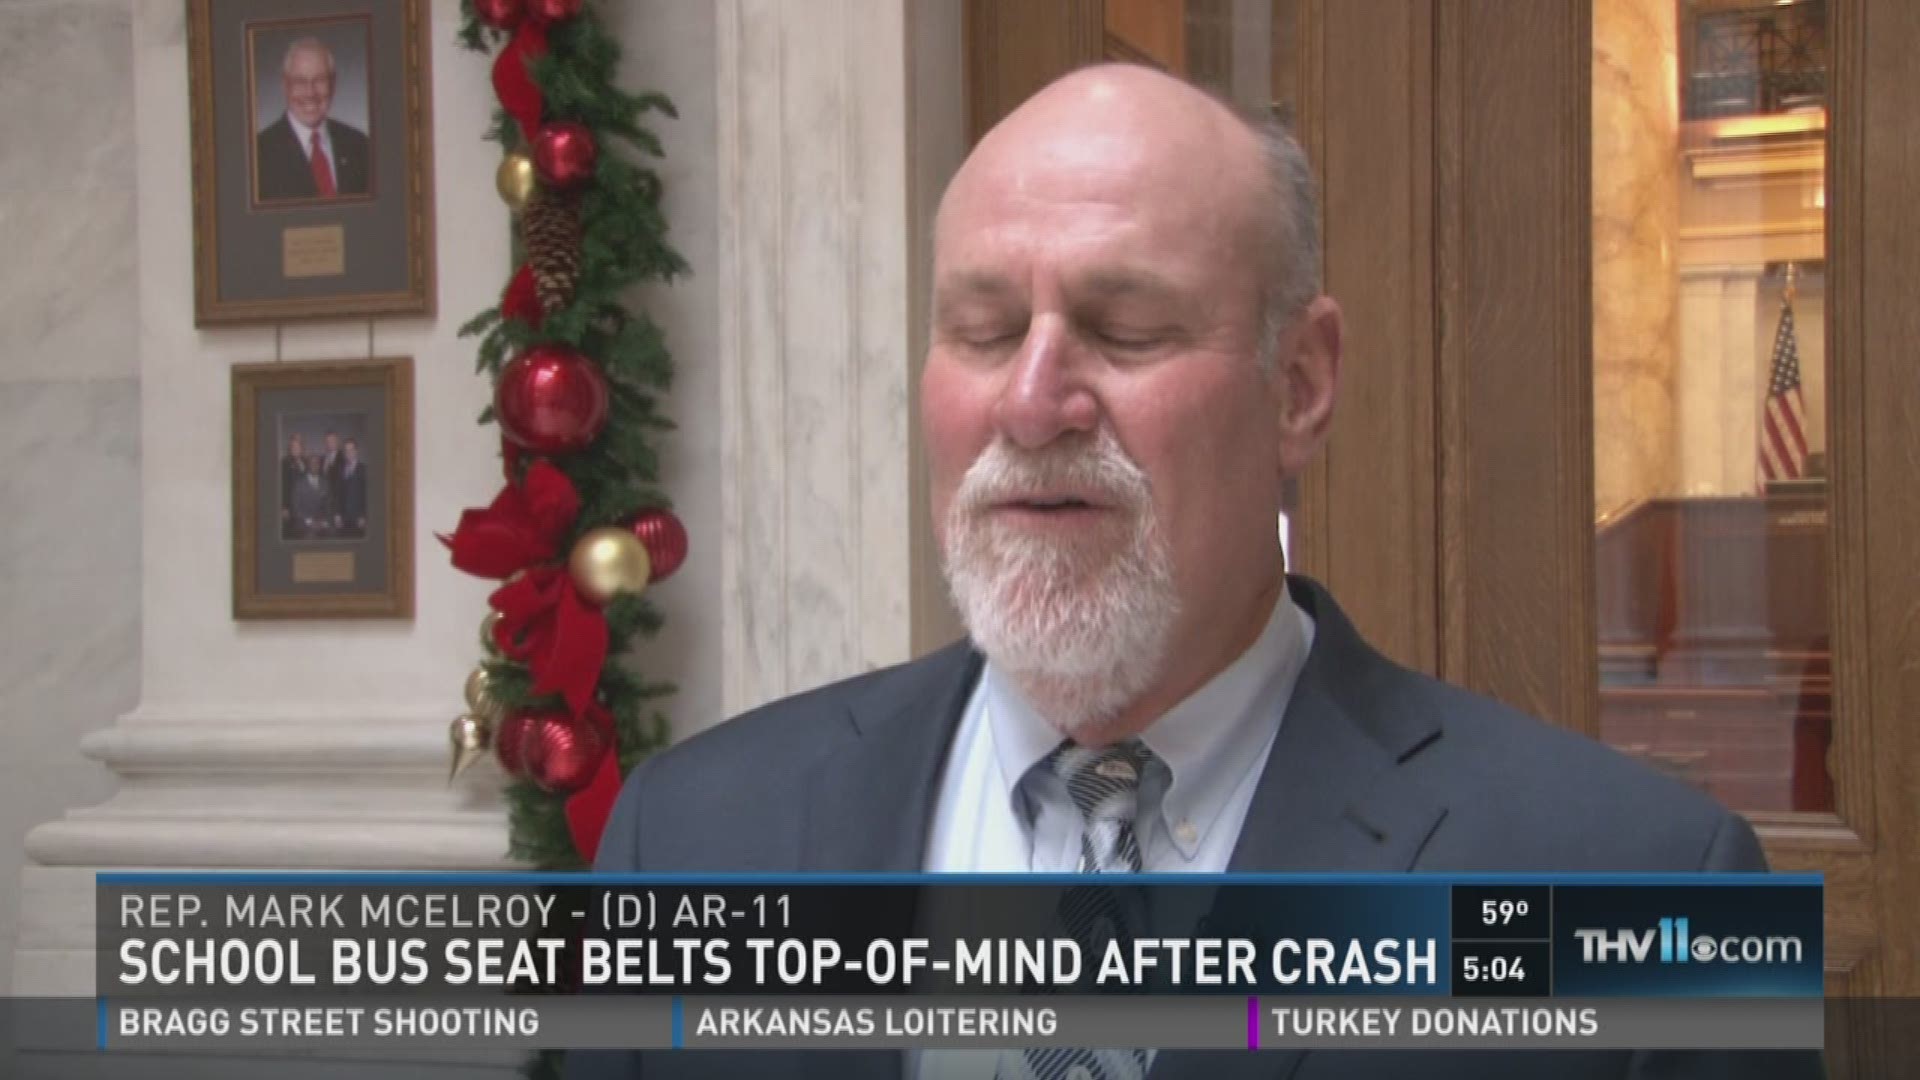 School bus seat belt top-of-mind after crash